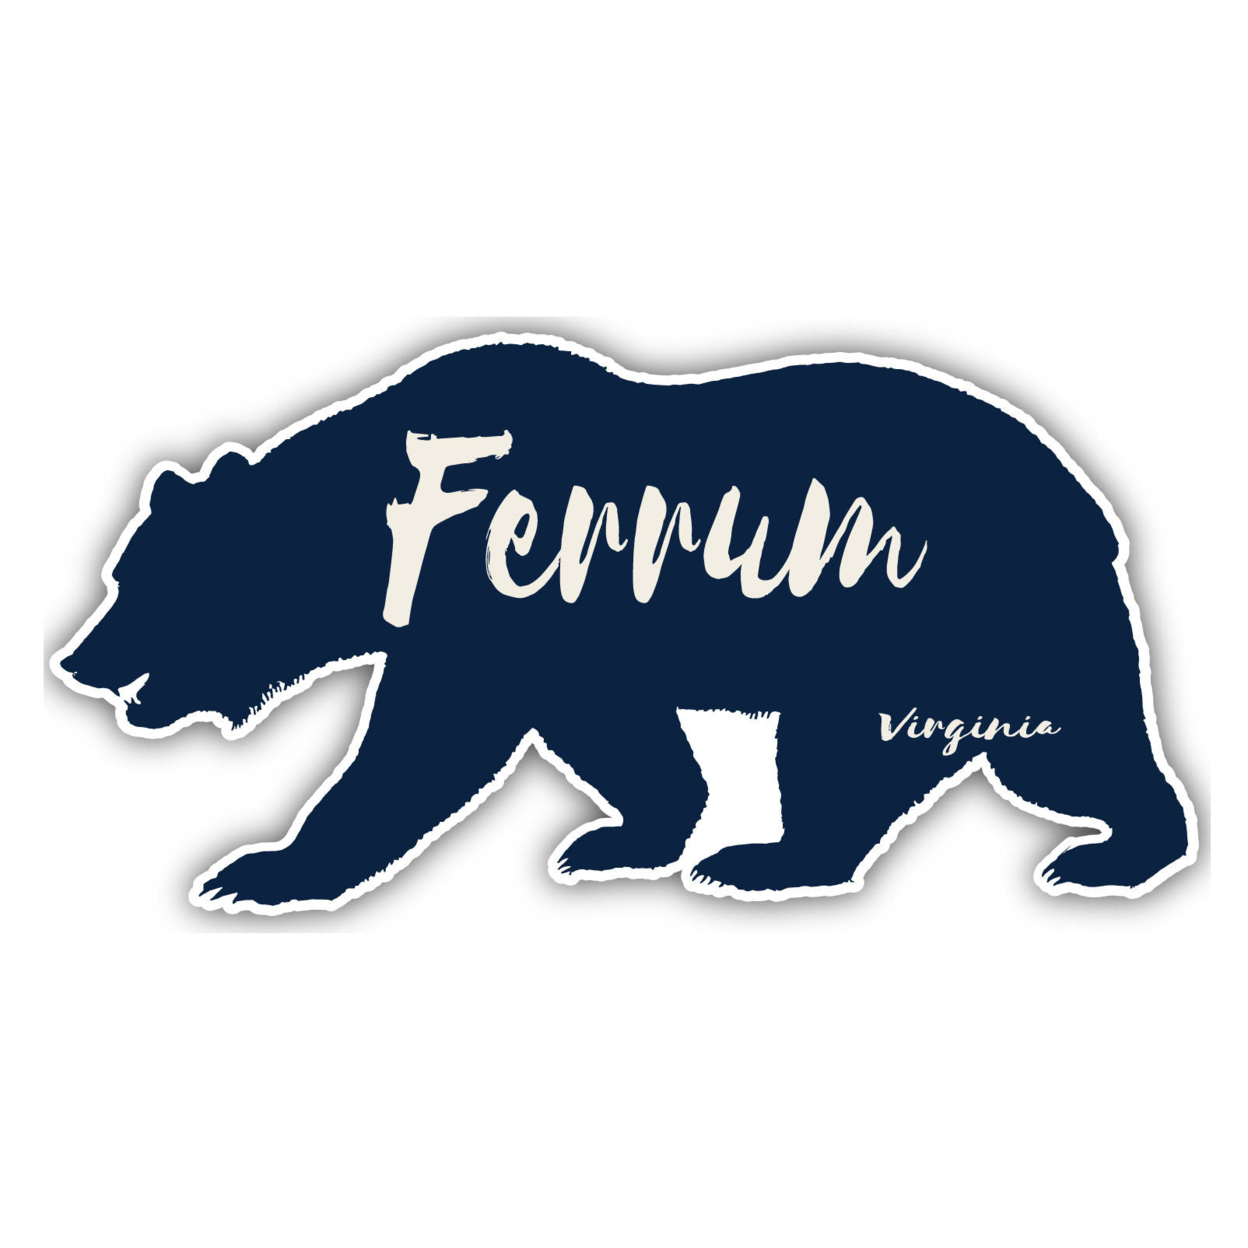 Ferrum Virginia Souvenir Decorative Stickers (Choose Theme And Size) - 4-Pack, 2-Inch, Bear